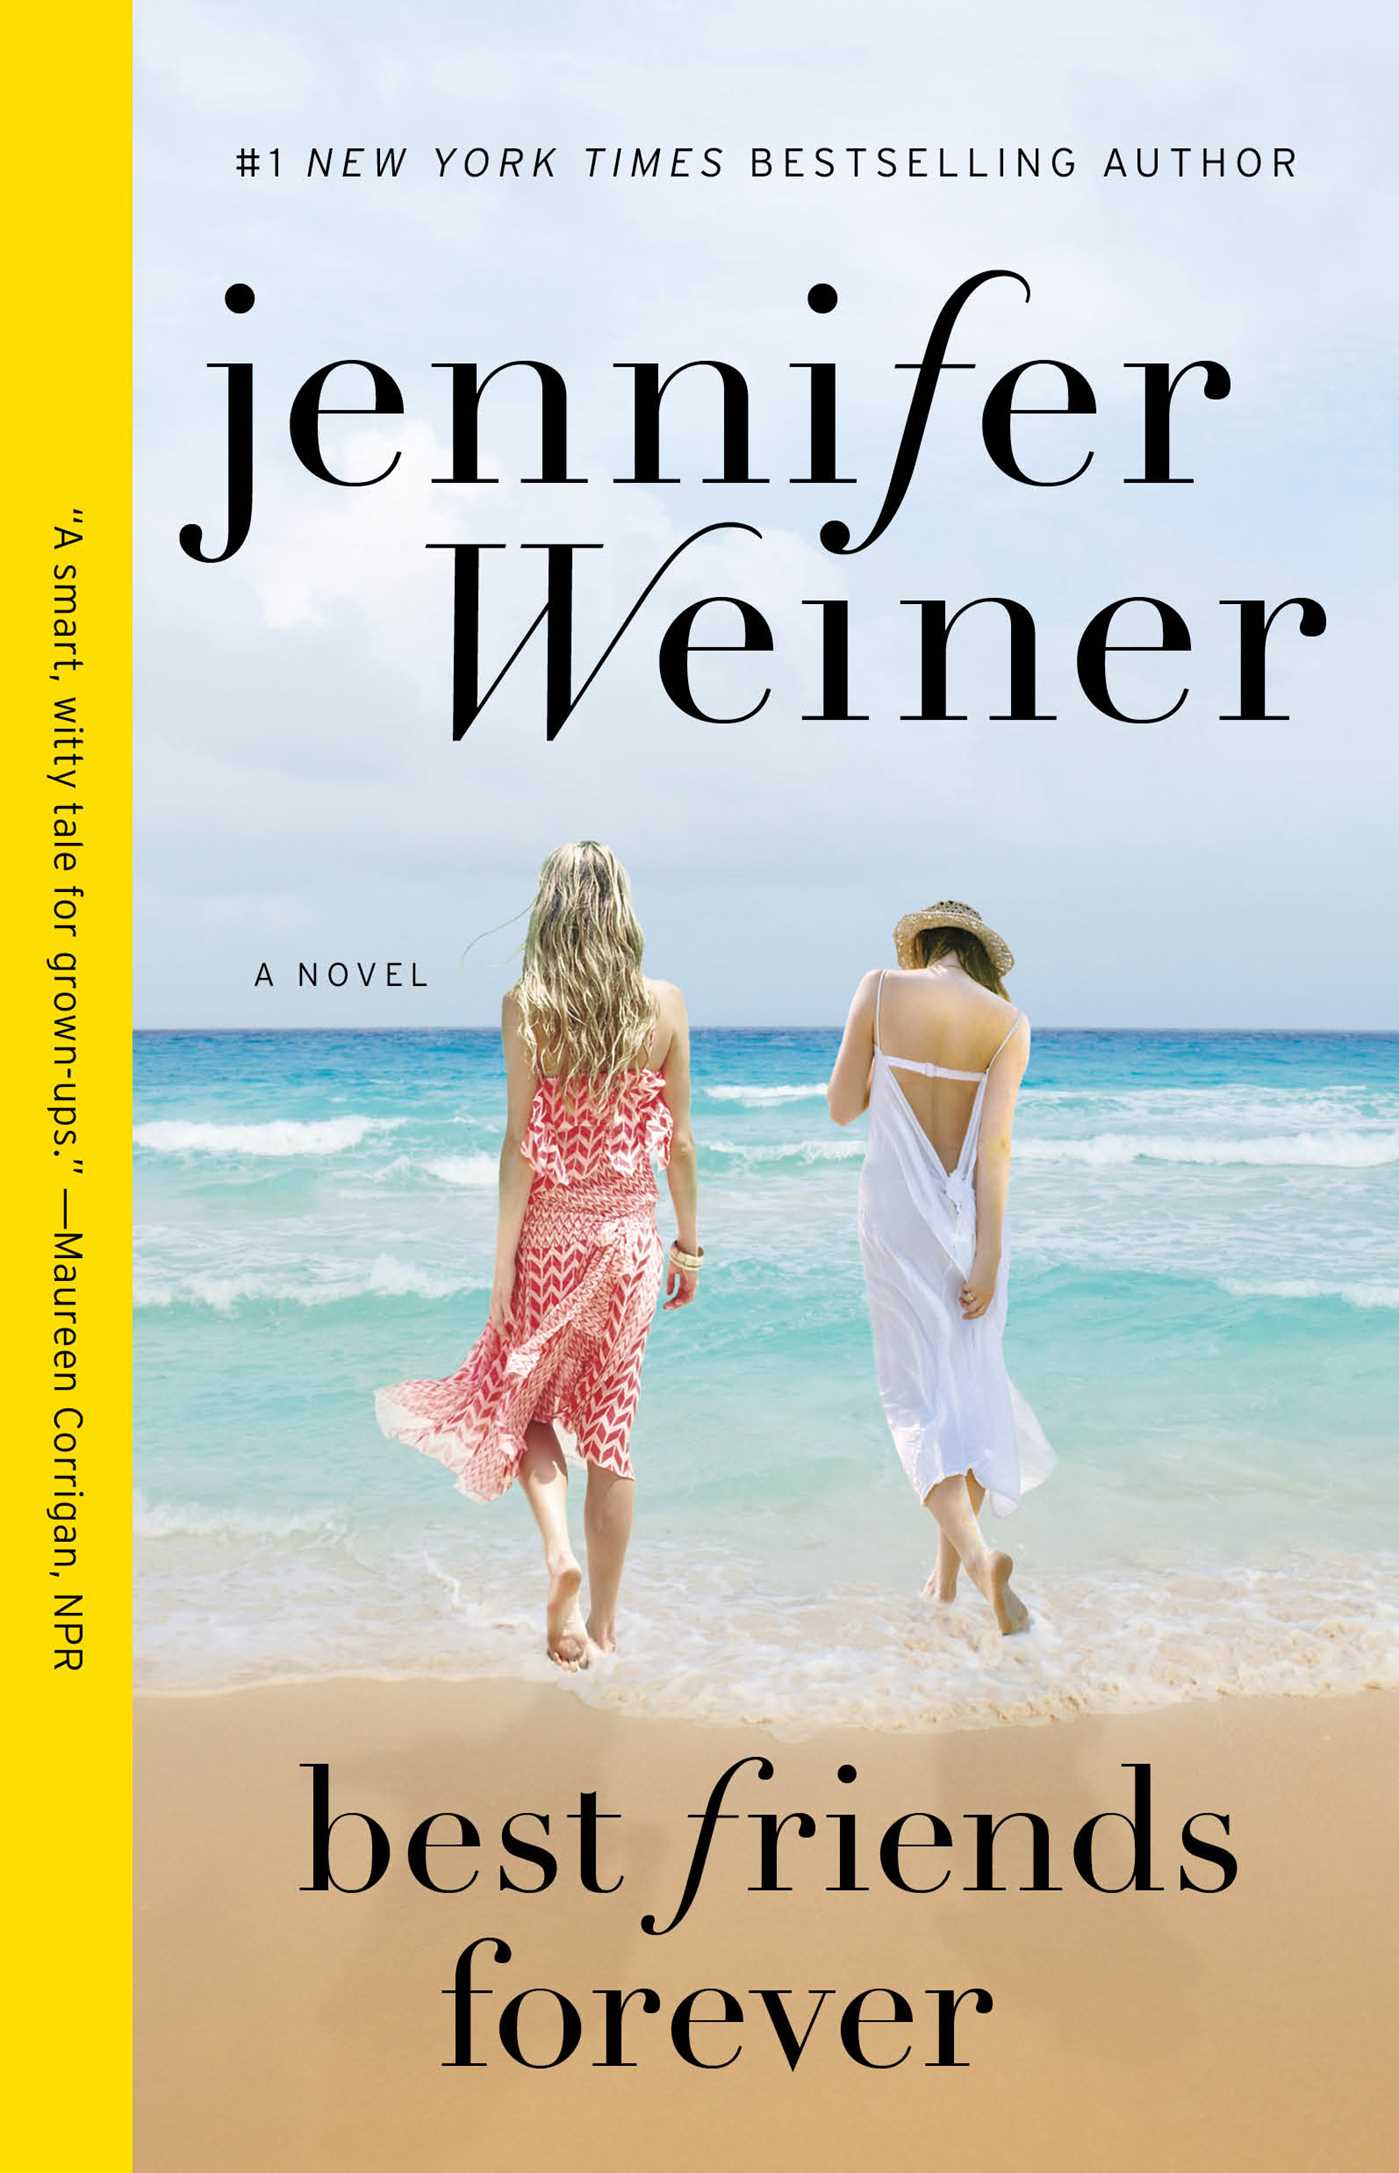 Best Friends Forever. Book by Jennifer Weiner. Official